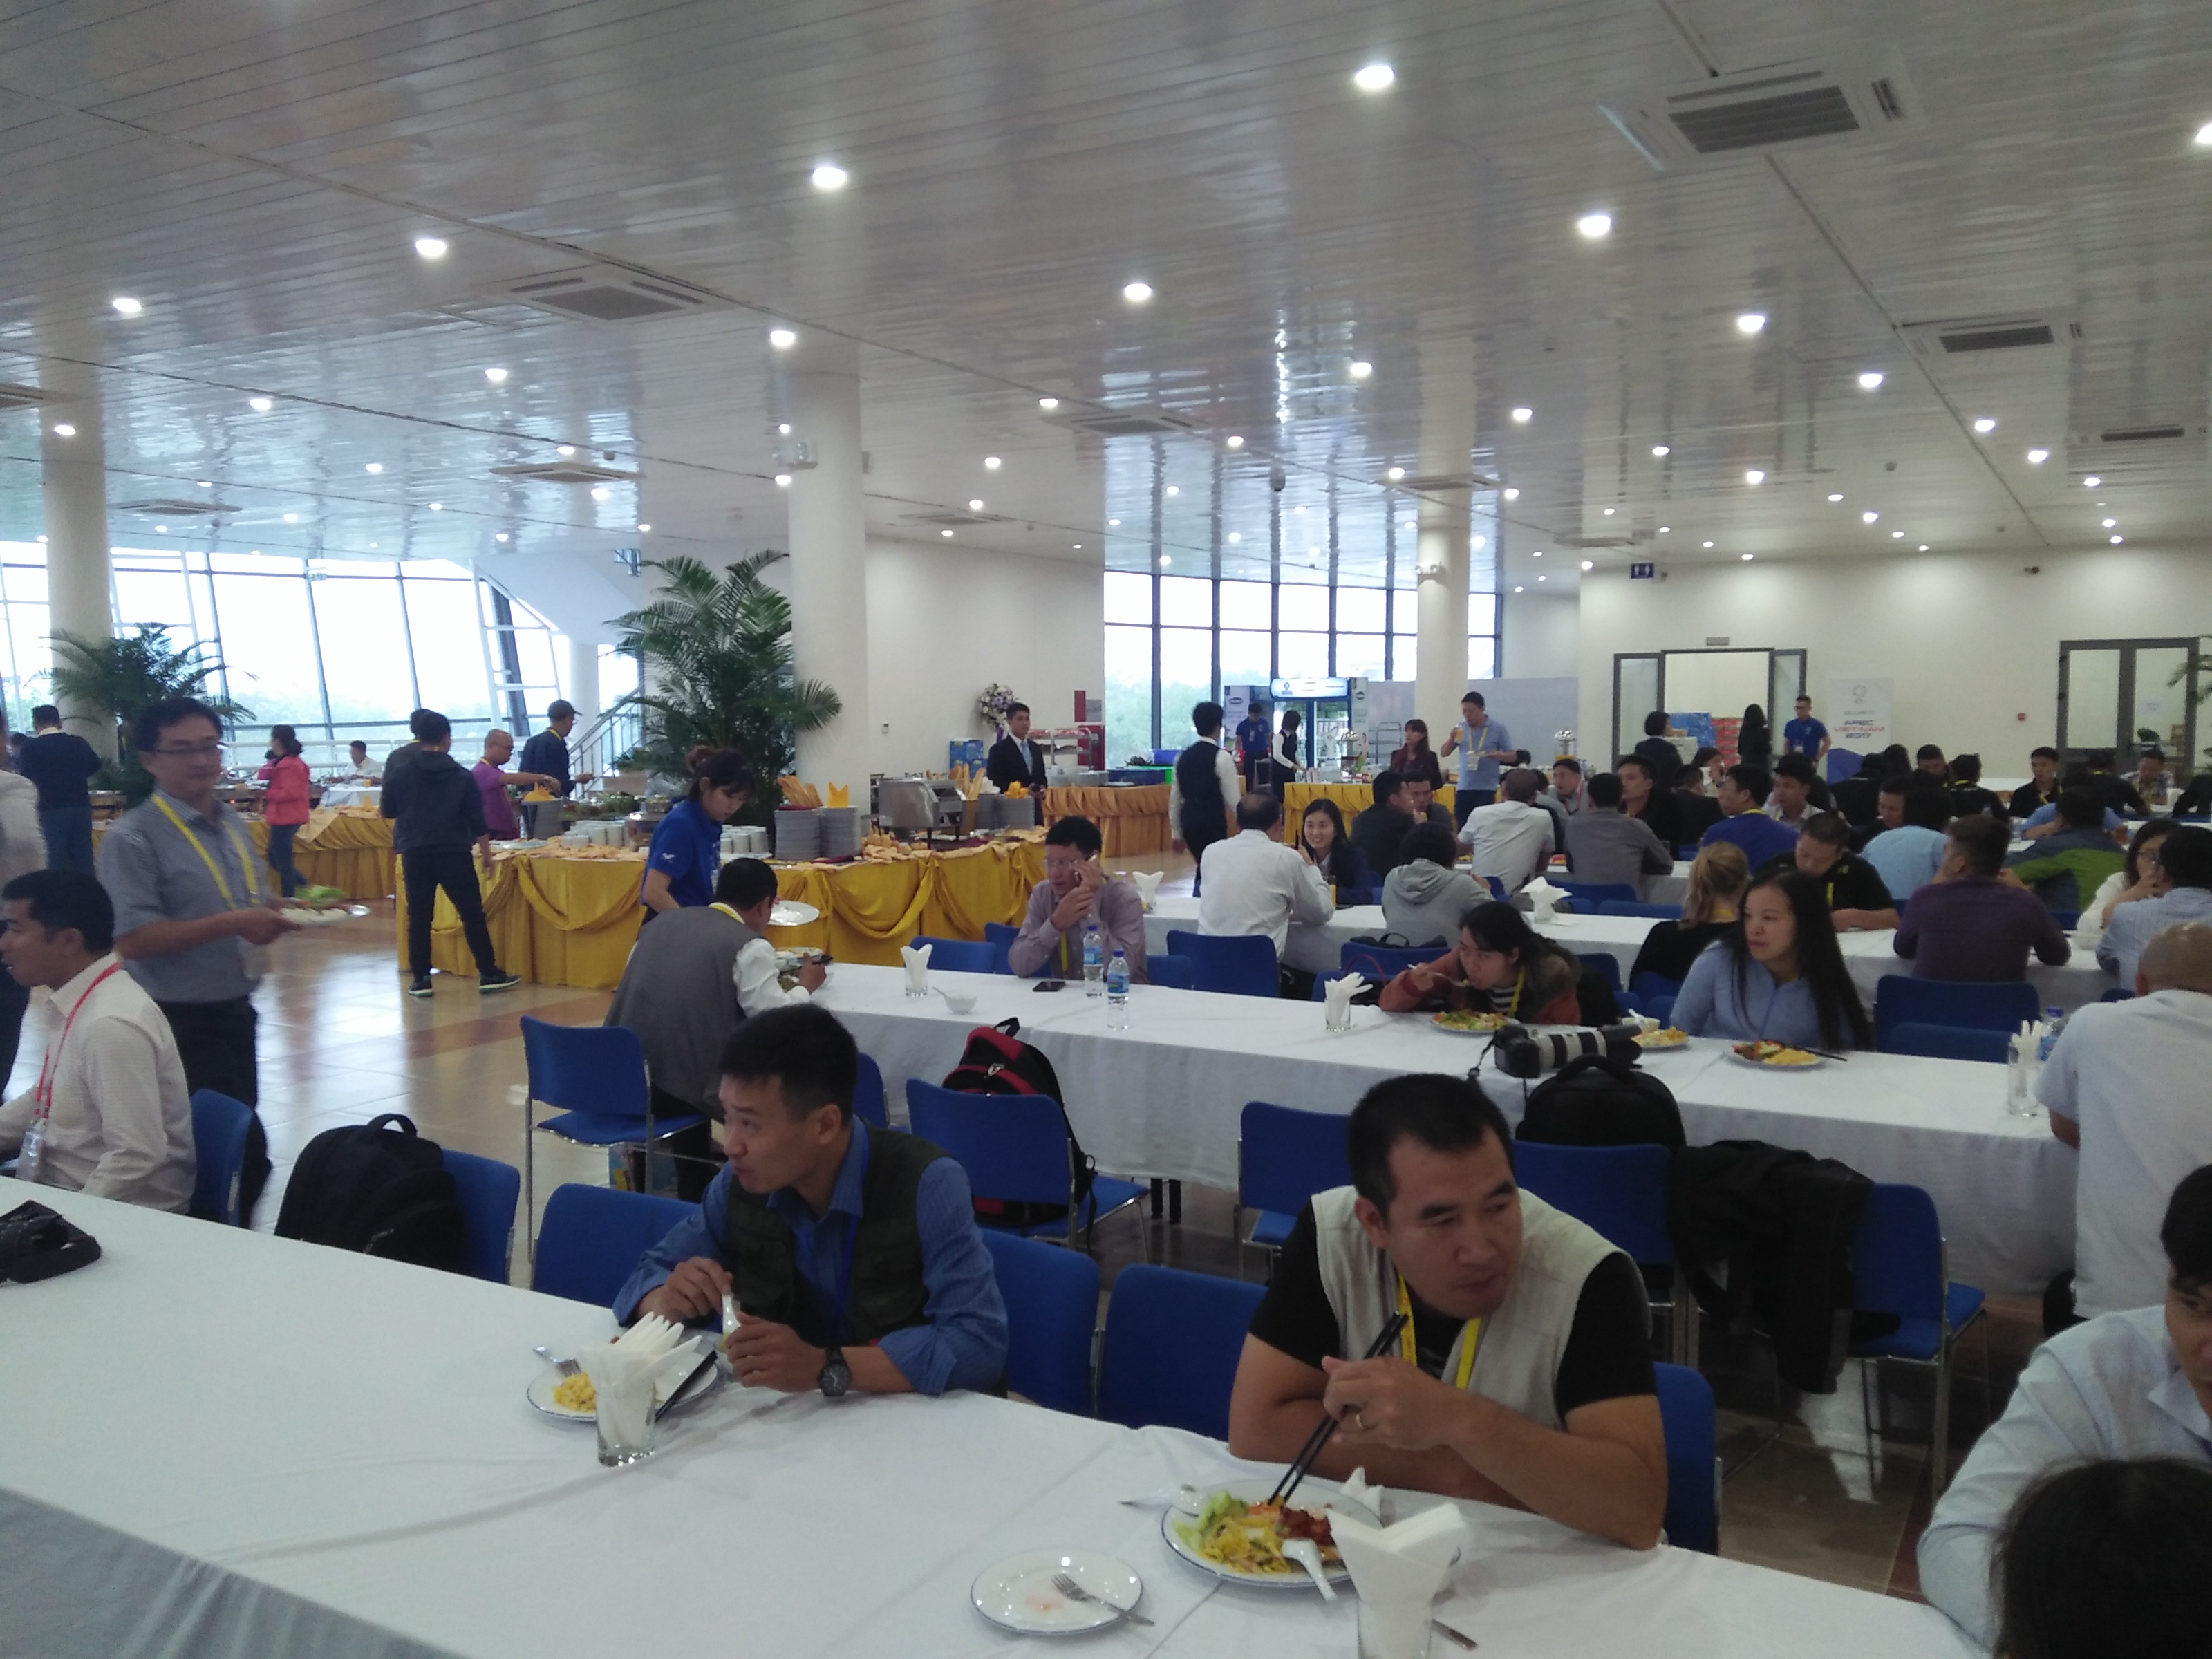 APEC media centre in full swing